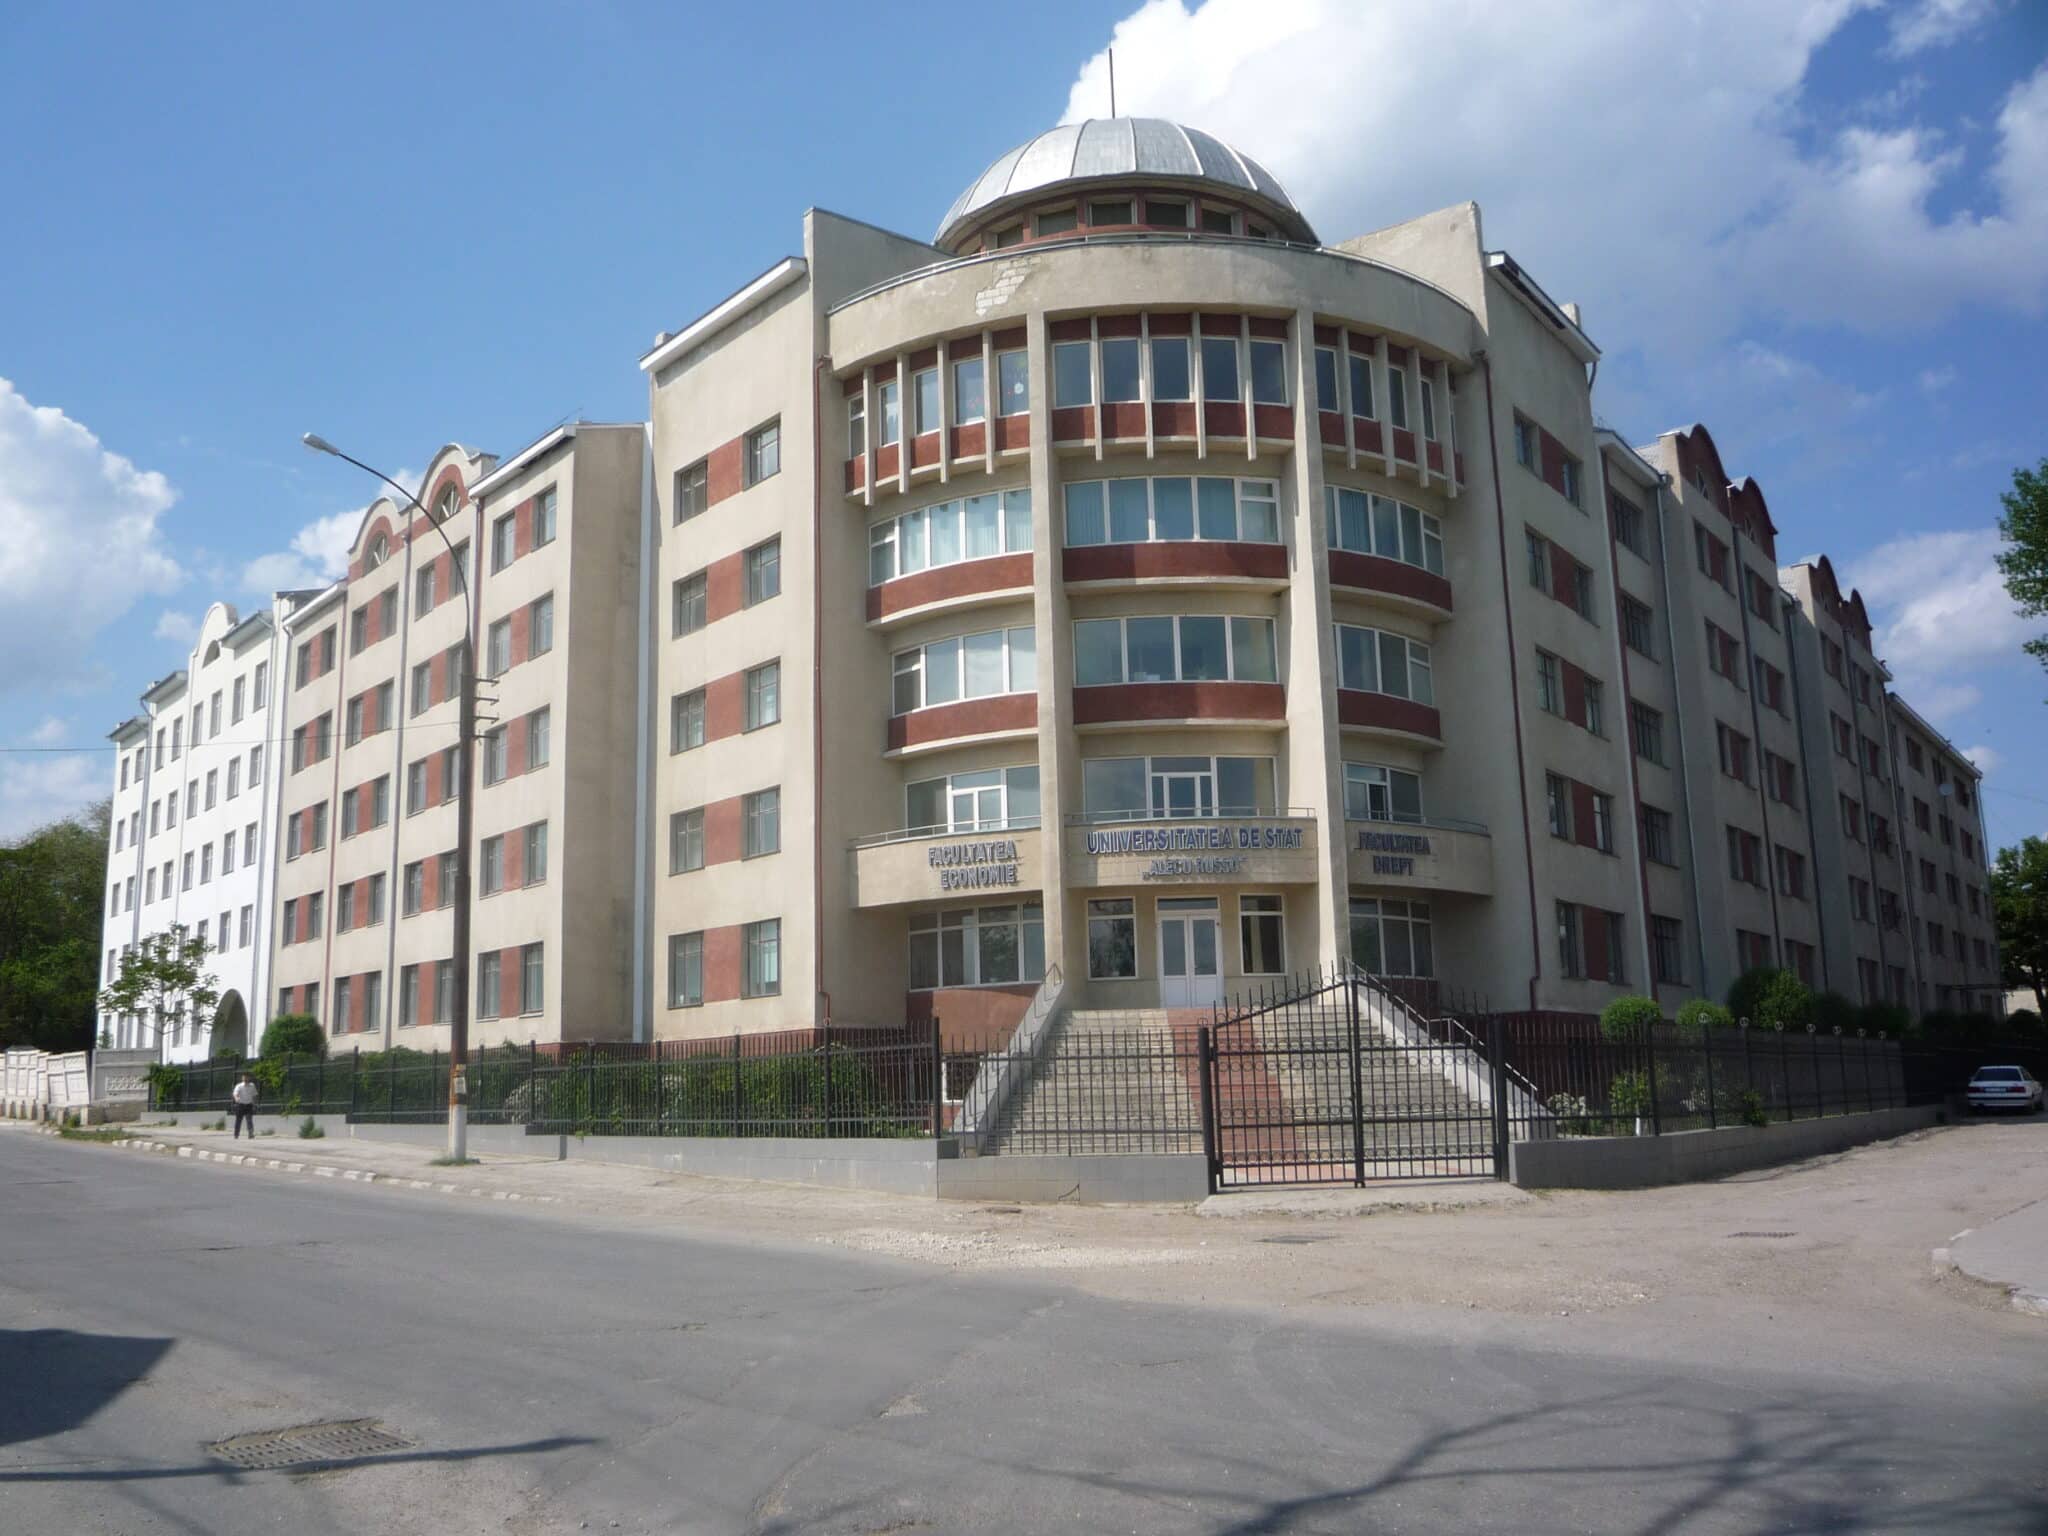 Facultatea de Econ si Drept Balti scaled - News Moldova